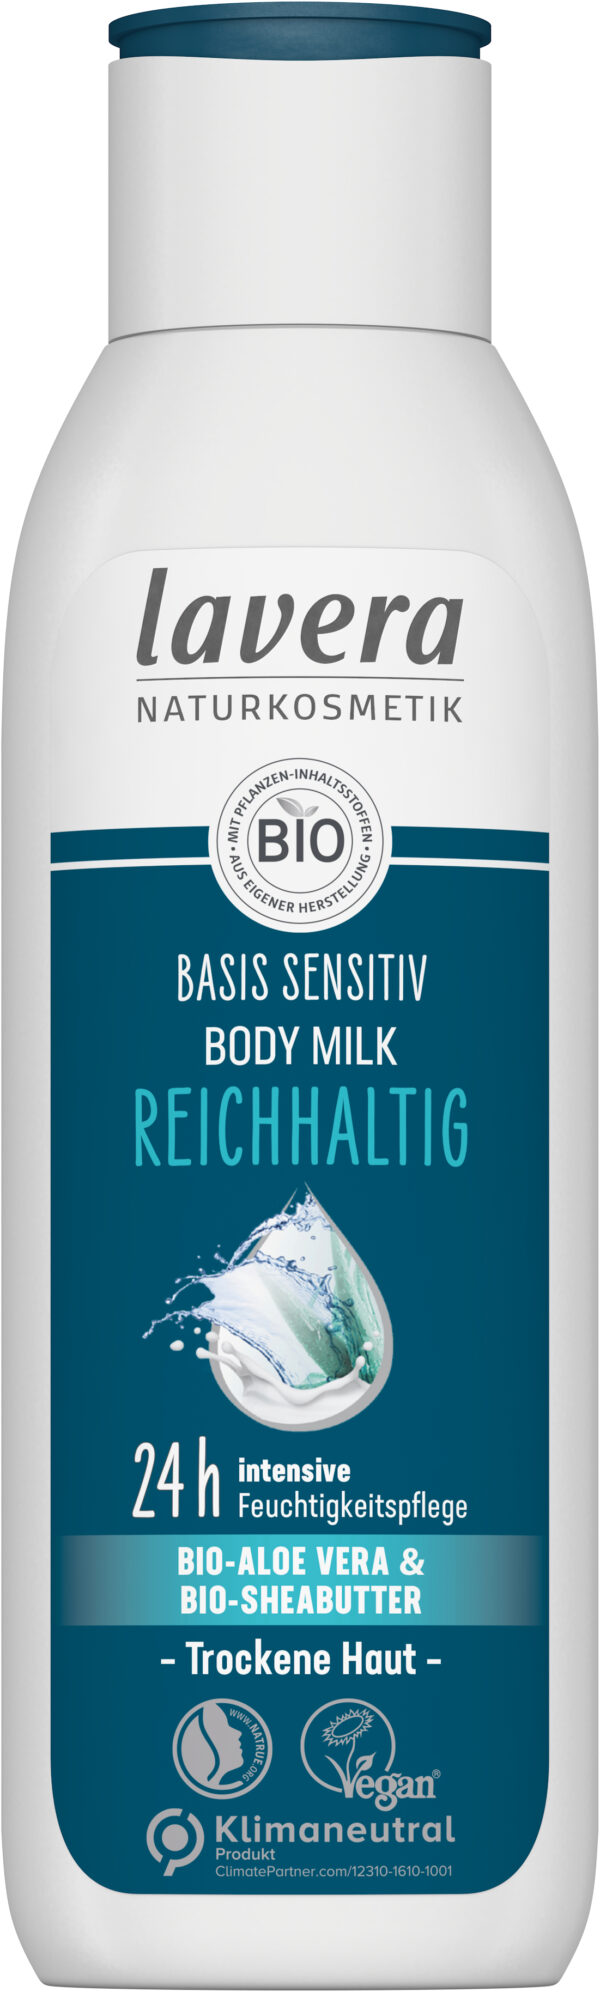 lavera basis sensitiv Body Milk Reichhaltig 250ml